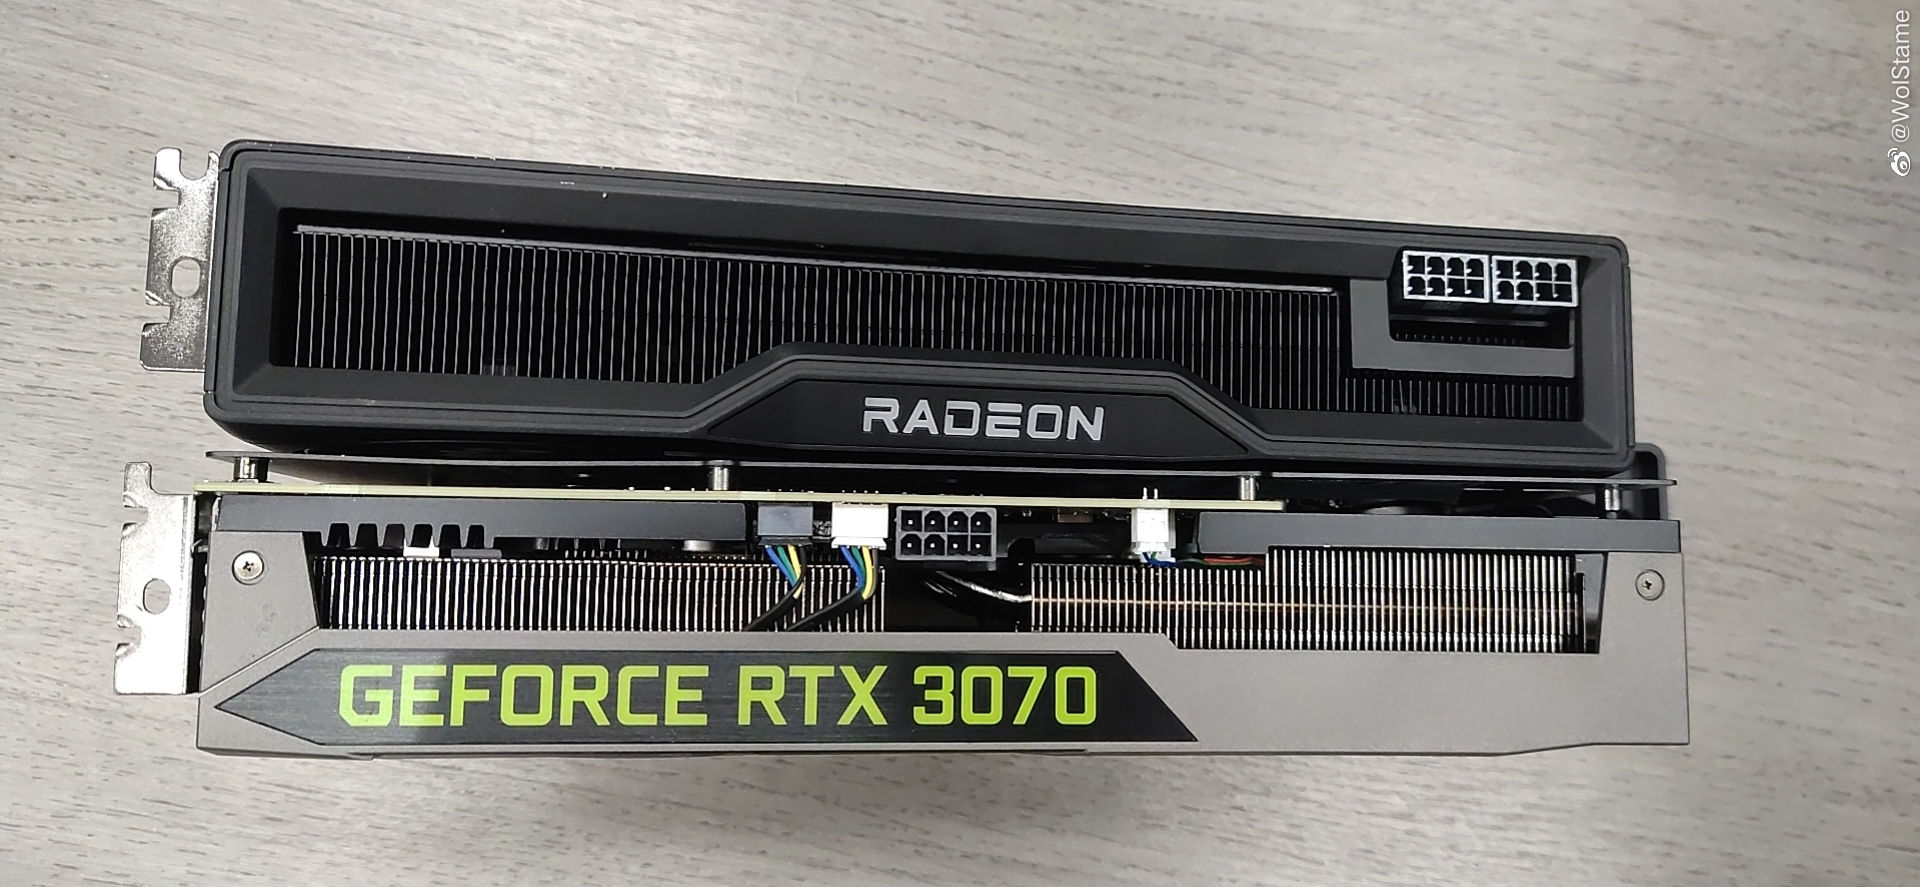 Media asset in full size related to 3dfxzone.it news item entitled as follows: Foto di una AMD Radeon RX 6800 XT accanto a una NVIDIA GeForce RTX 3070 | Image Name: news31311_Radeon-RX-6800-XT_2.jpg